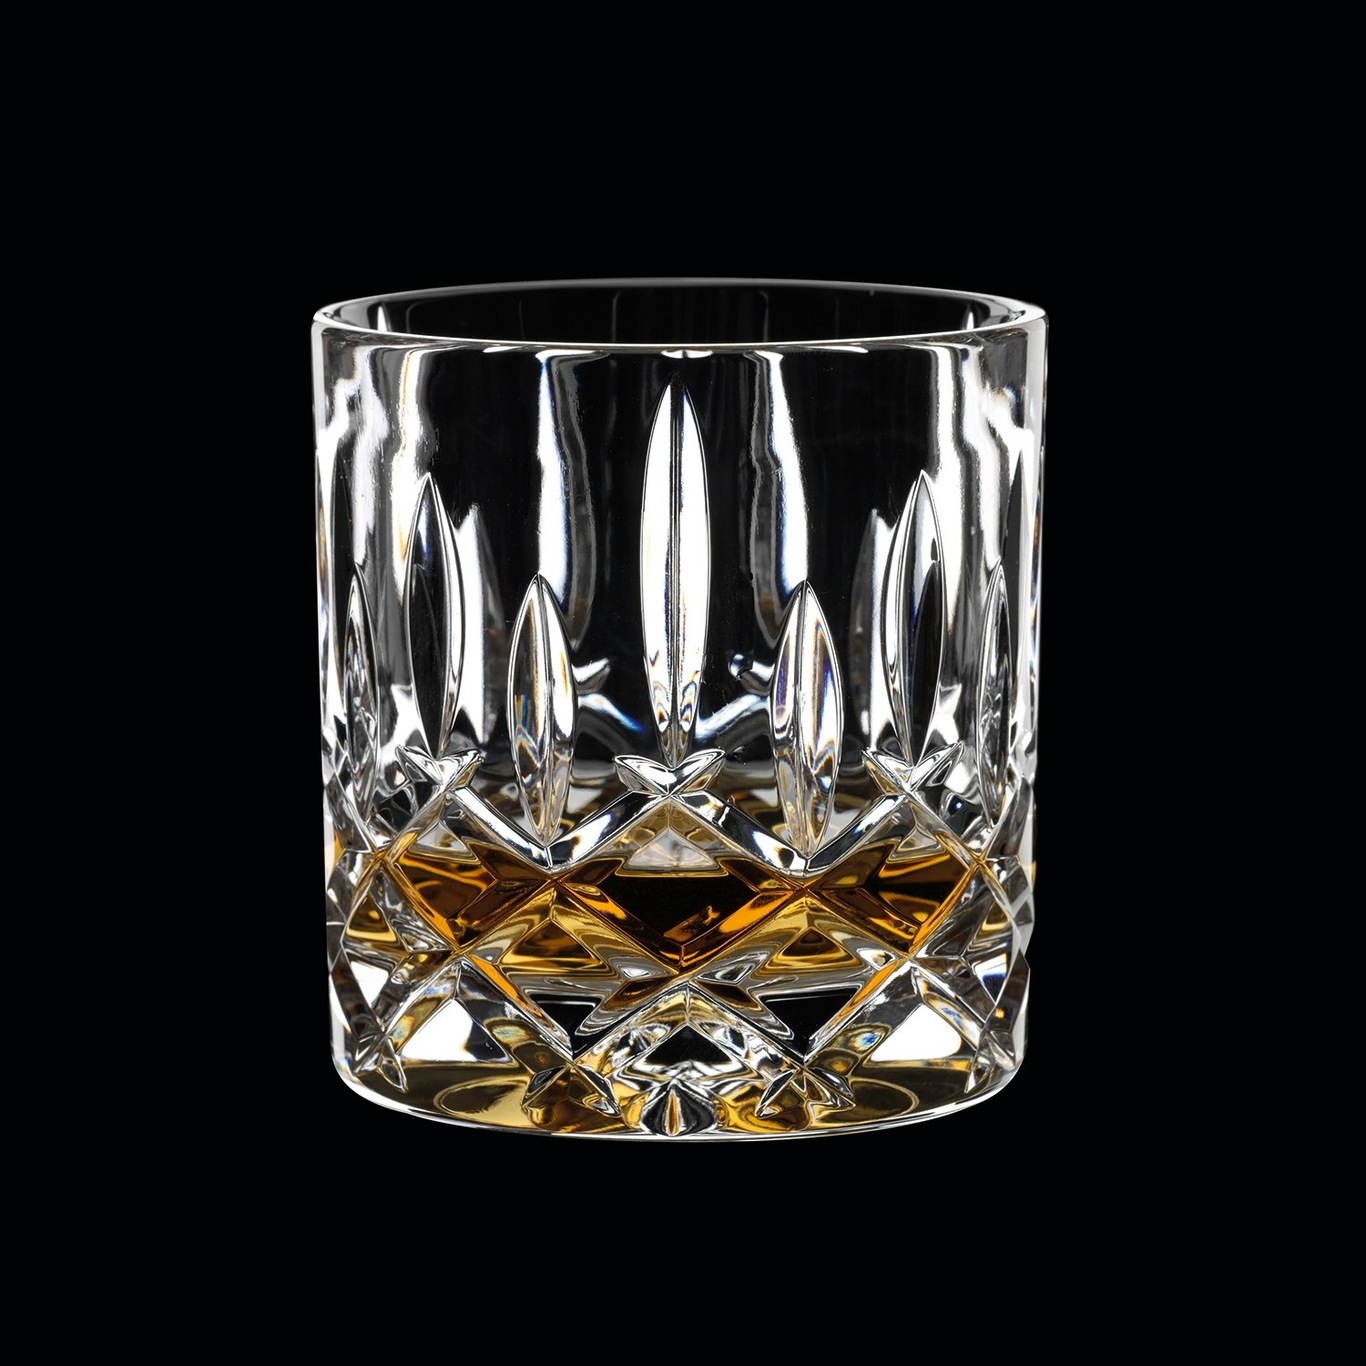 https://royaldesign.com/image/2/nachtmann-noblesse-whisky-tumbler-245cl-set-of-4-1?w=800&quality=80